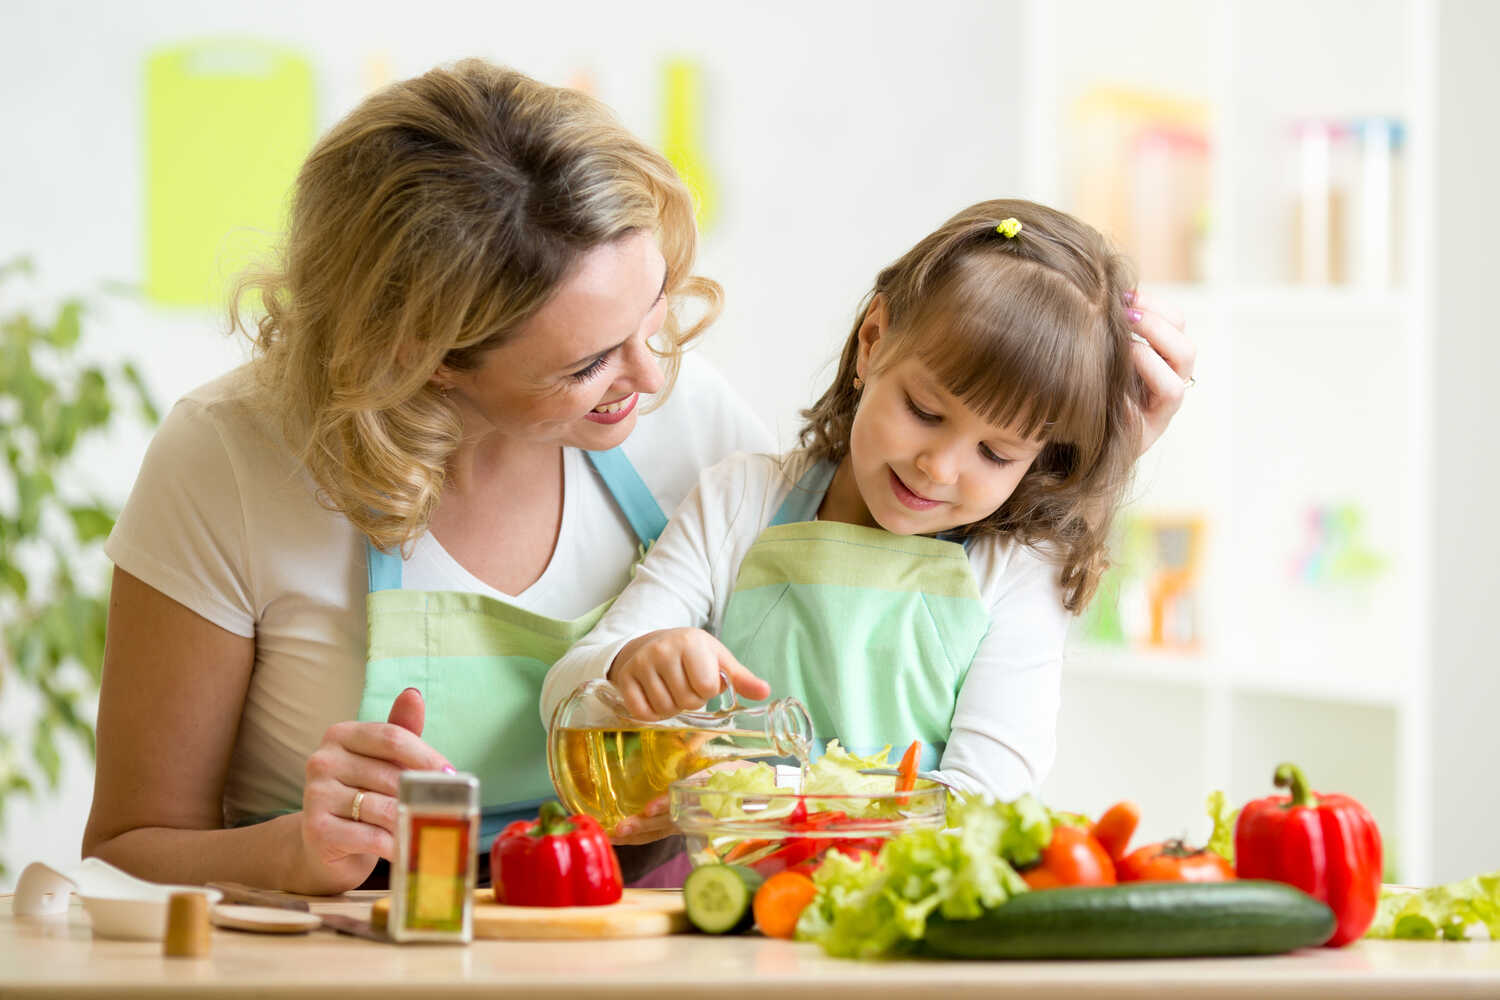 Ensure proper nutrition for your kids